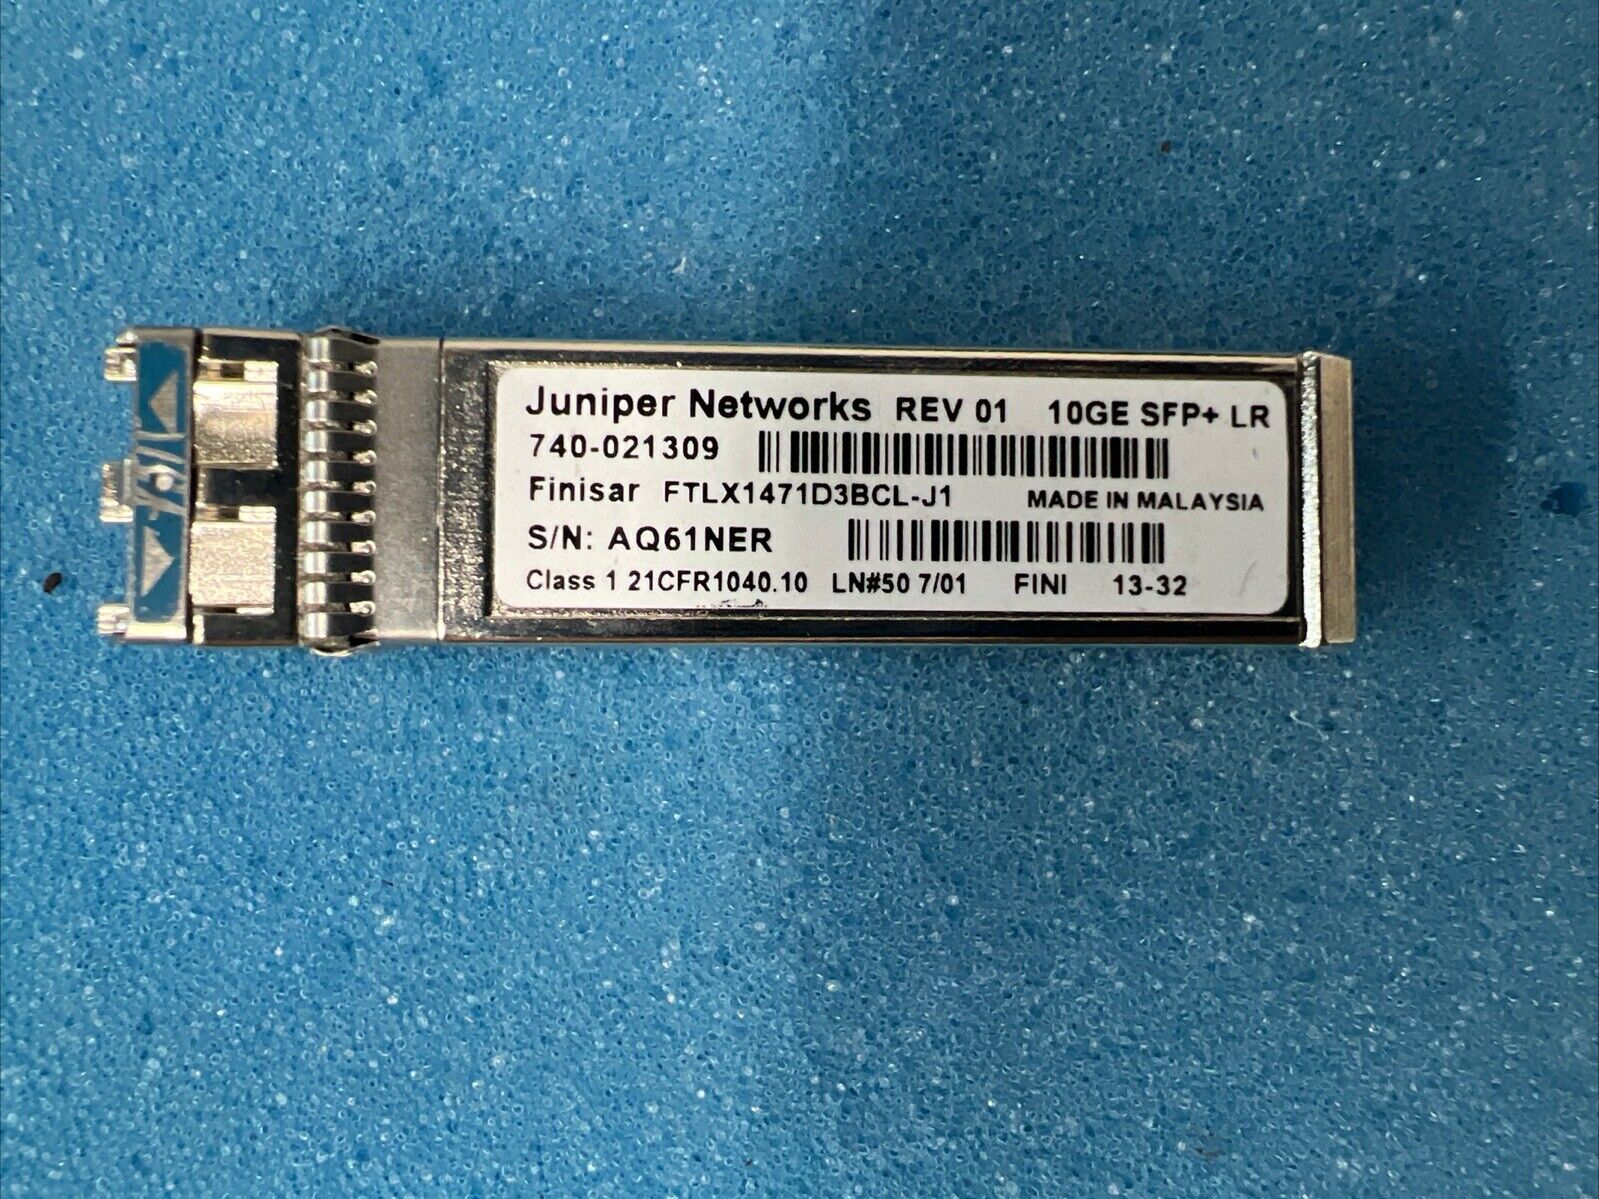 740-021309 Juniper Networks SFP+ 10GE LR 740-021309 Single Mode 